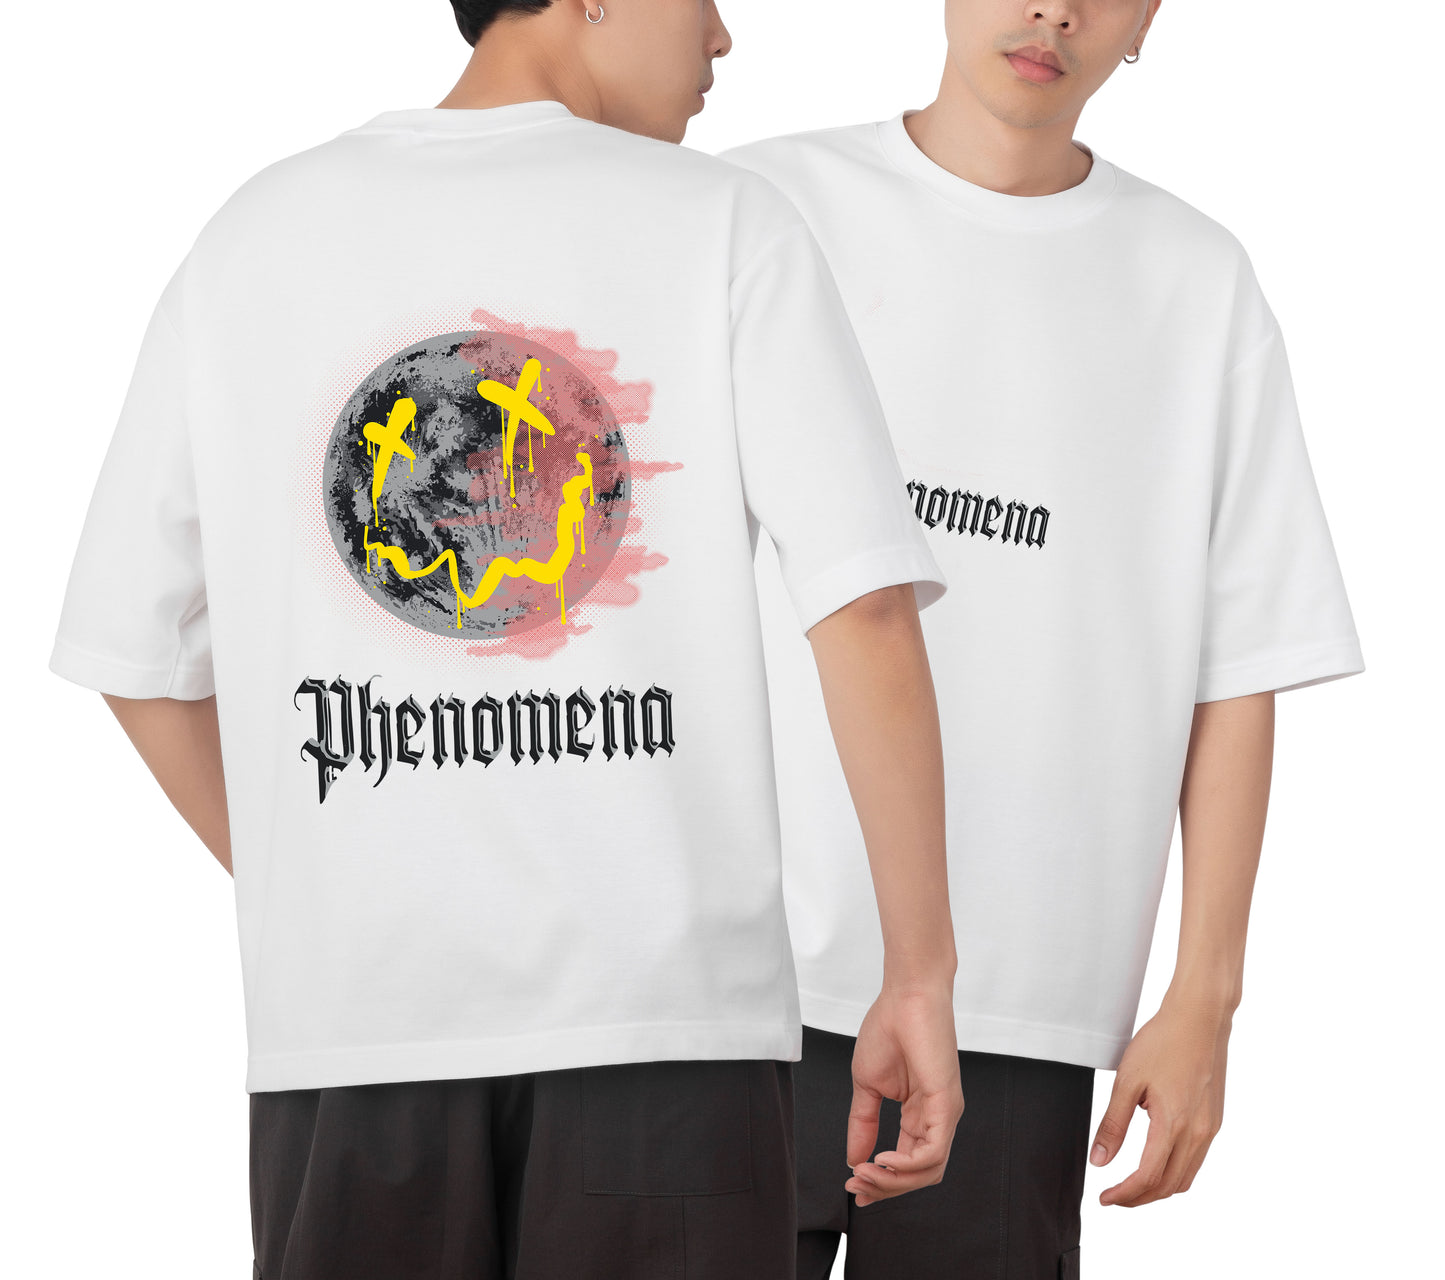 Dhenomeno Graphic Printed  Unisex Oversized T-shirt D082